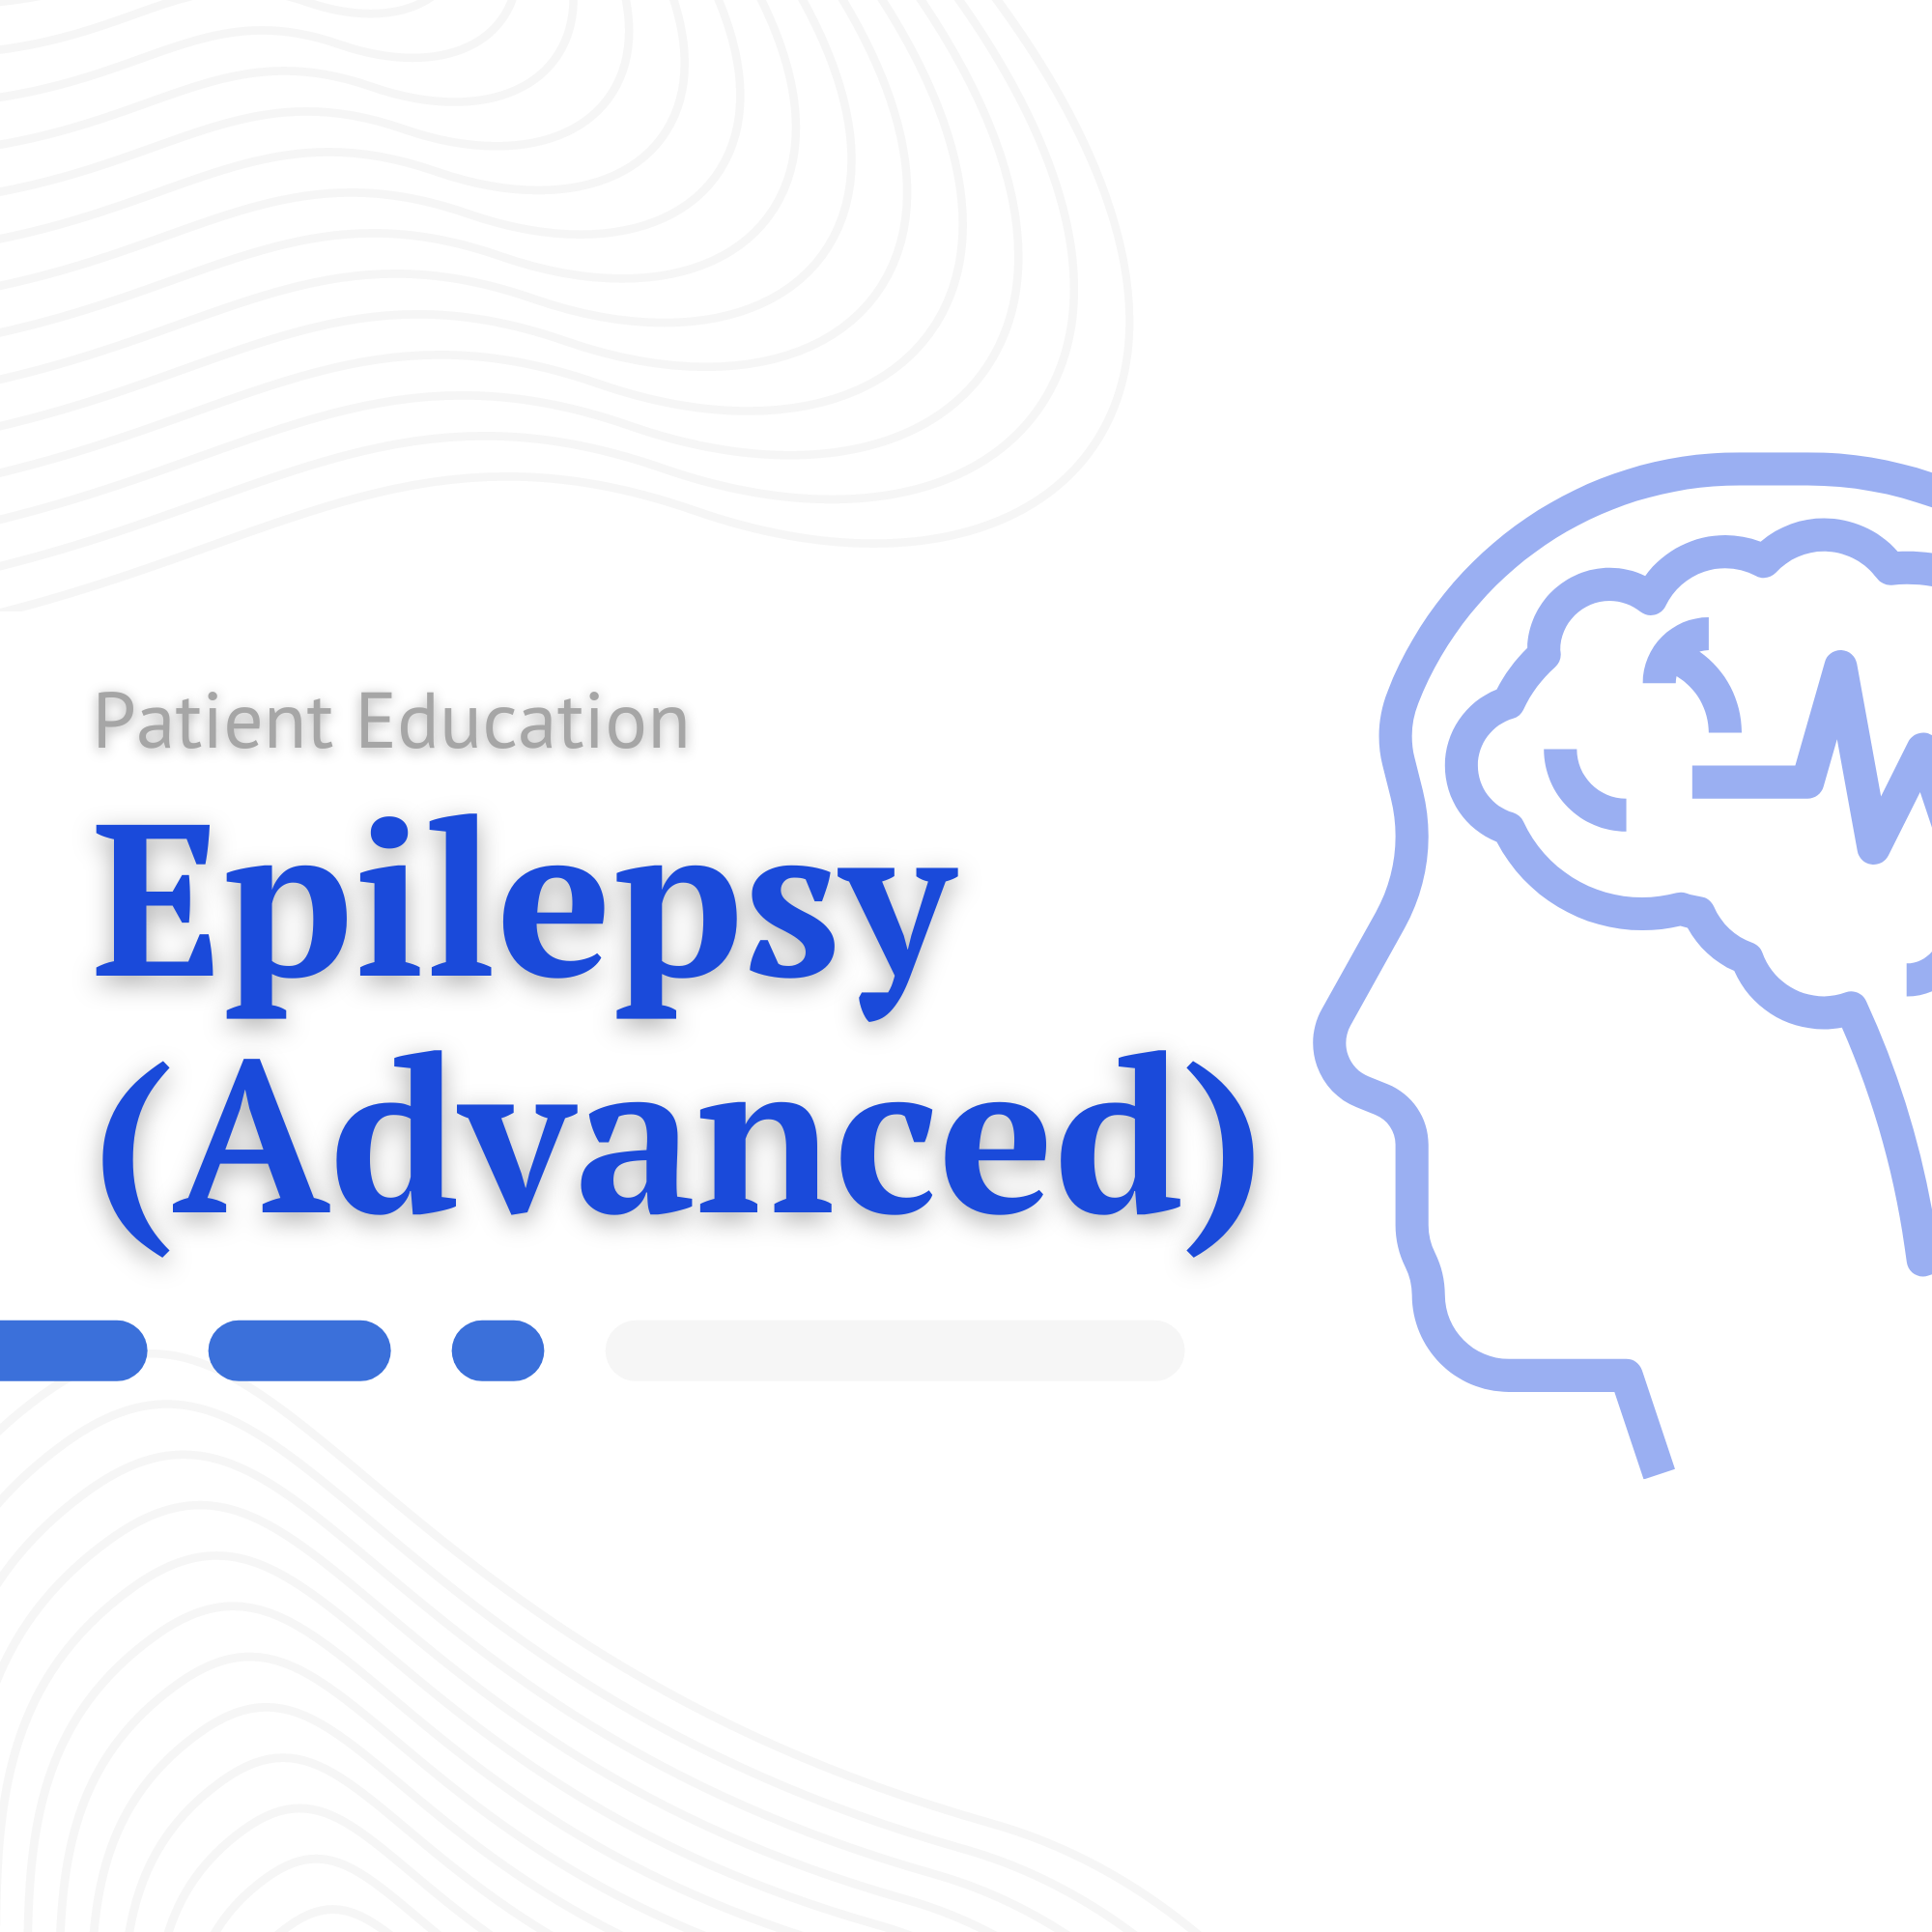 Epilepsy (Advanced)